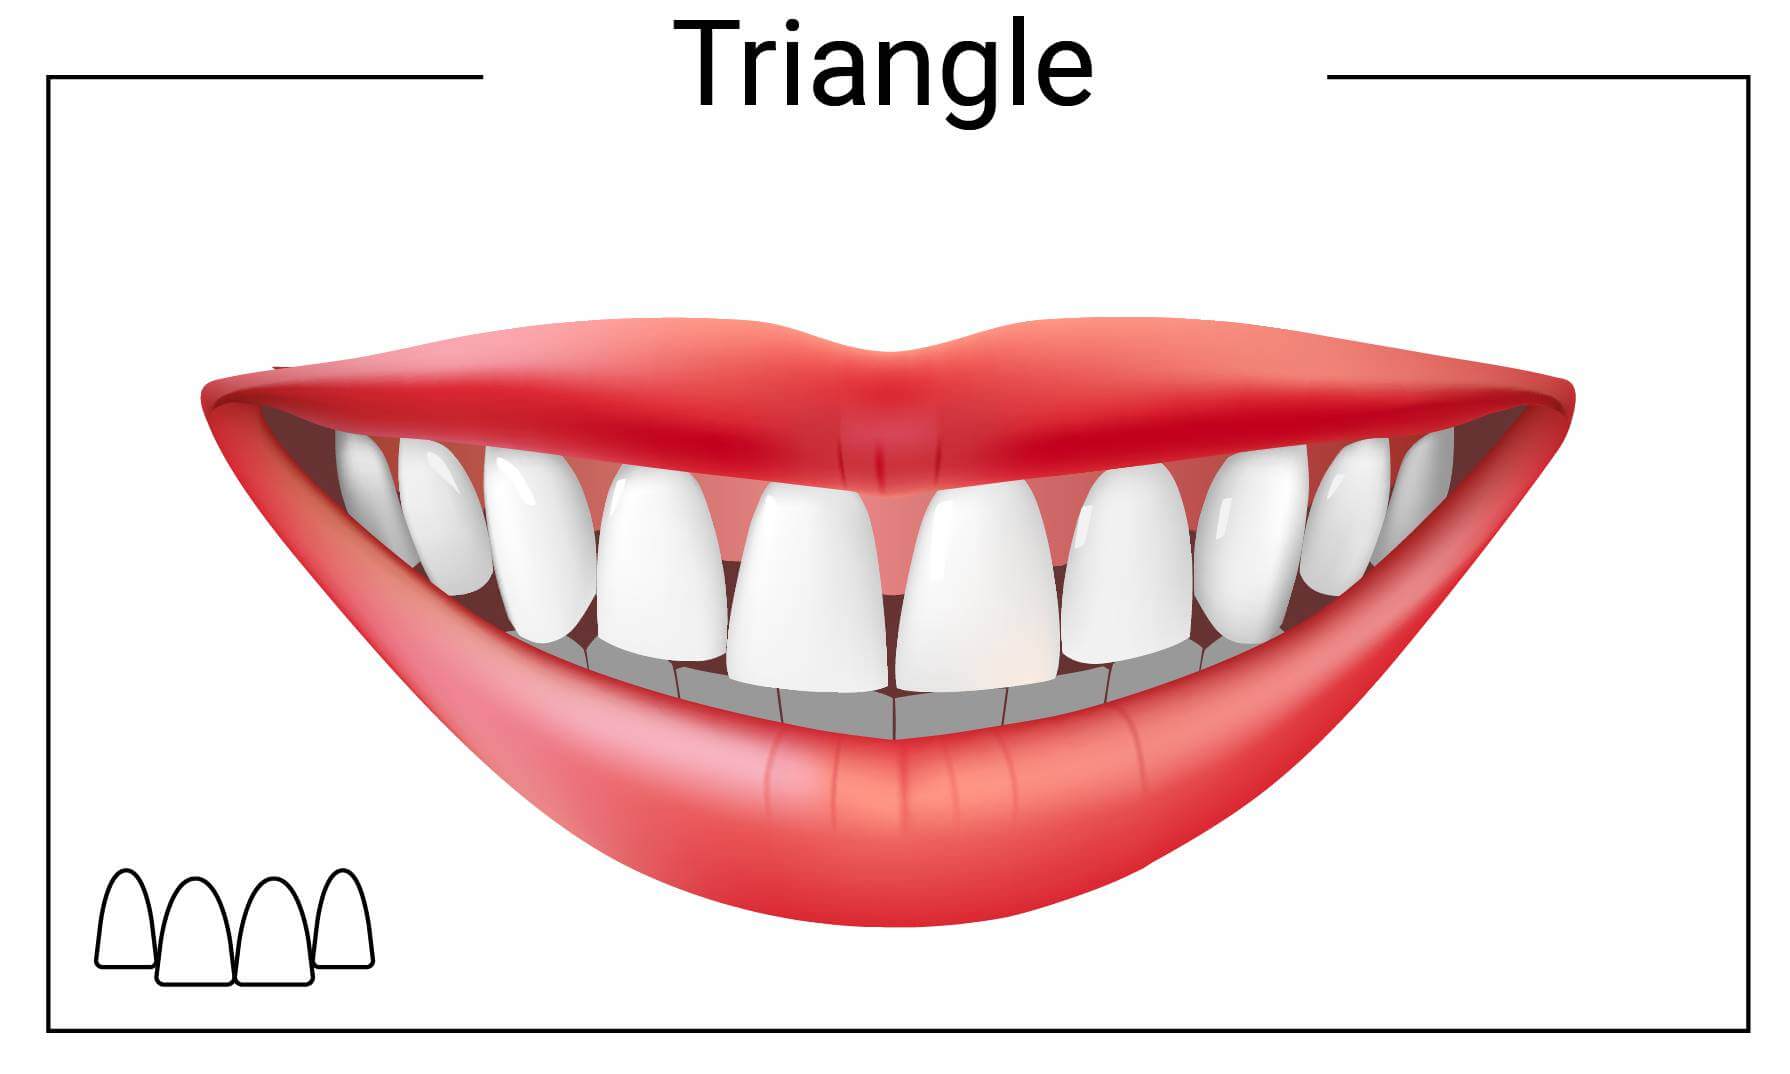 Triangular Tooth Shape